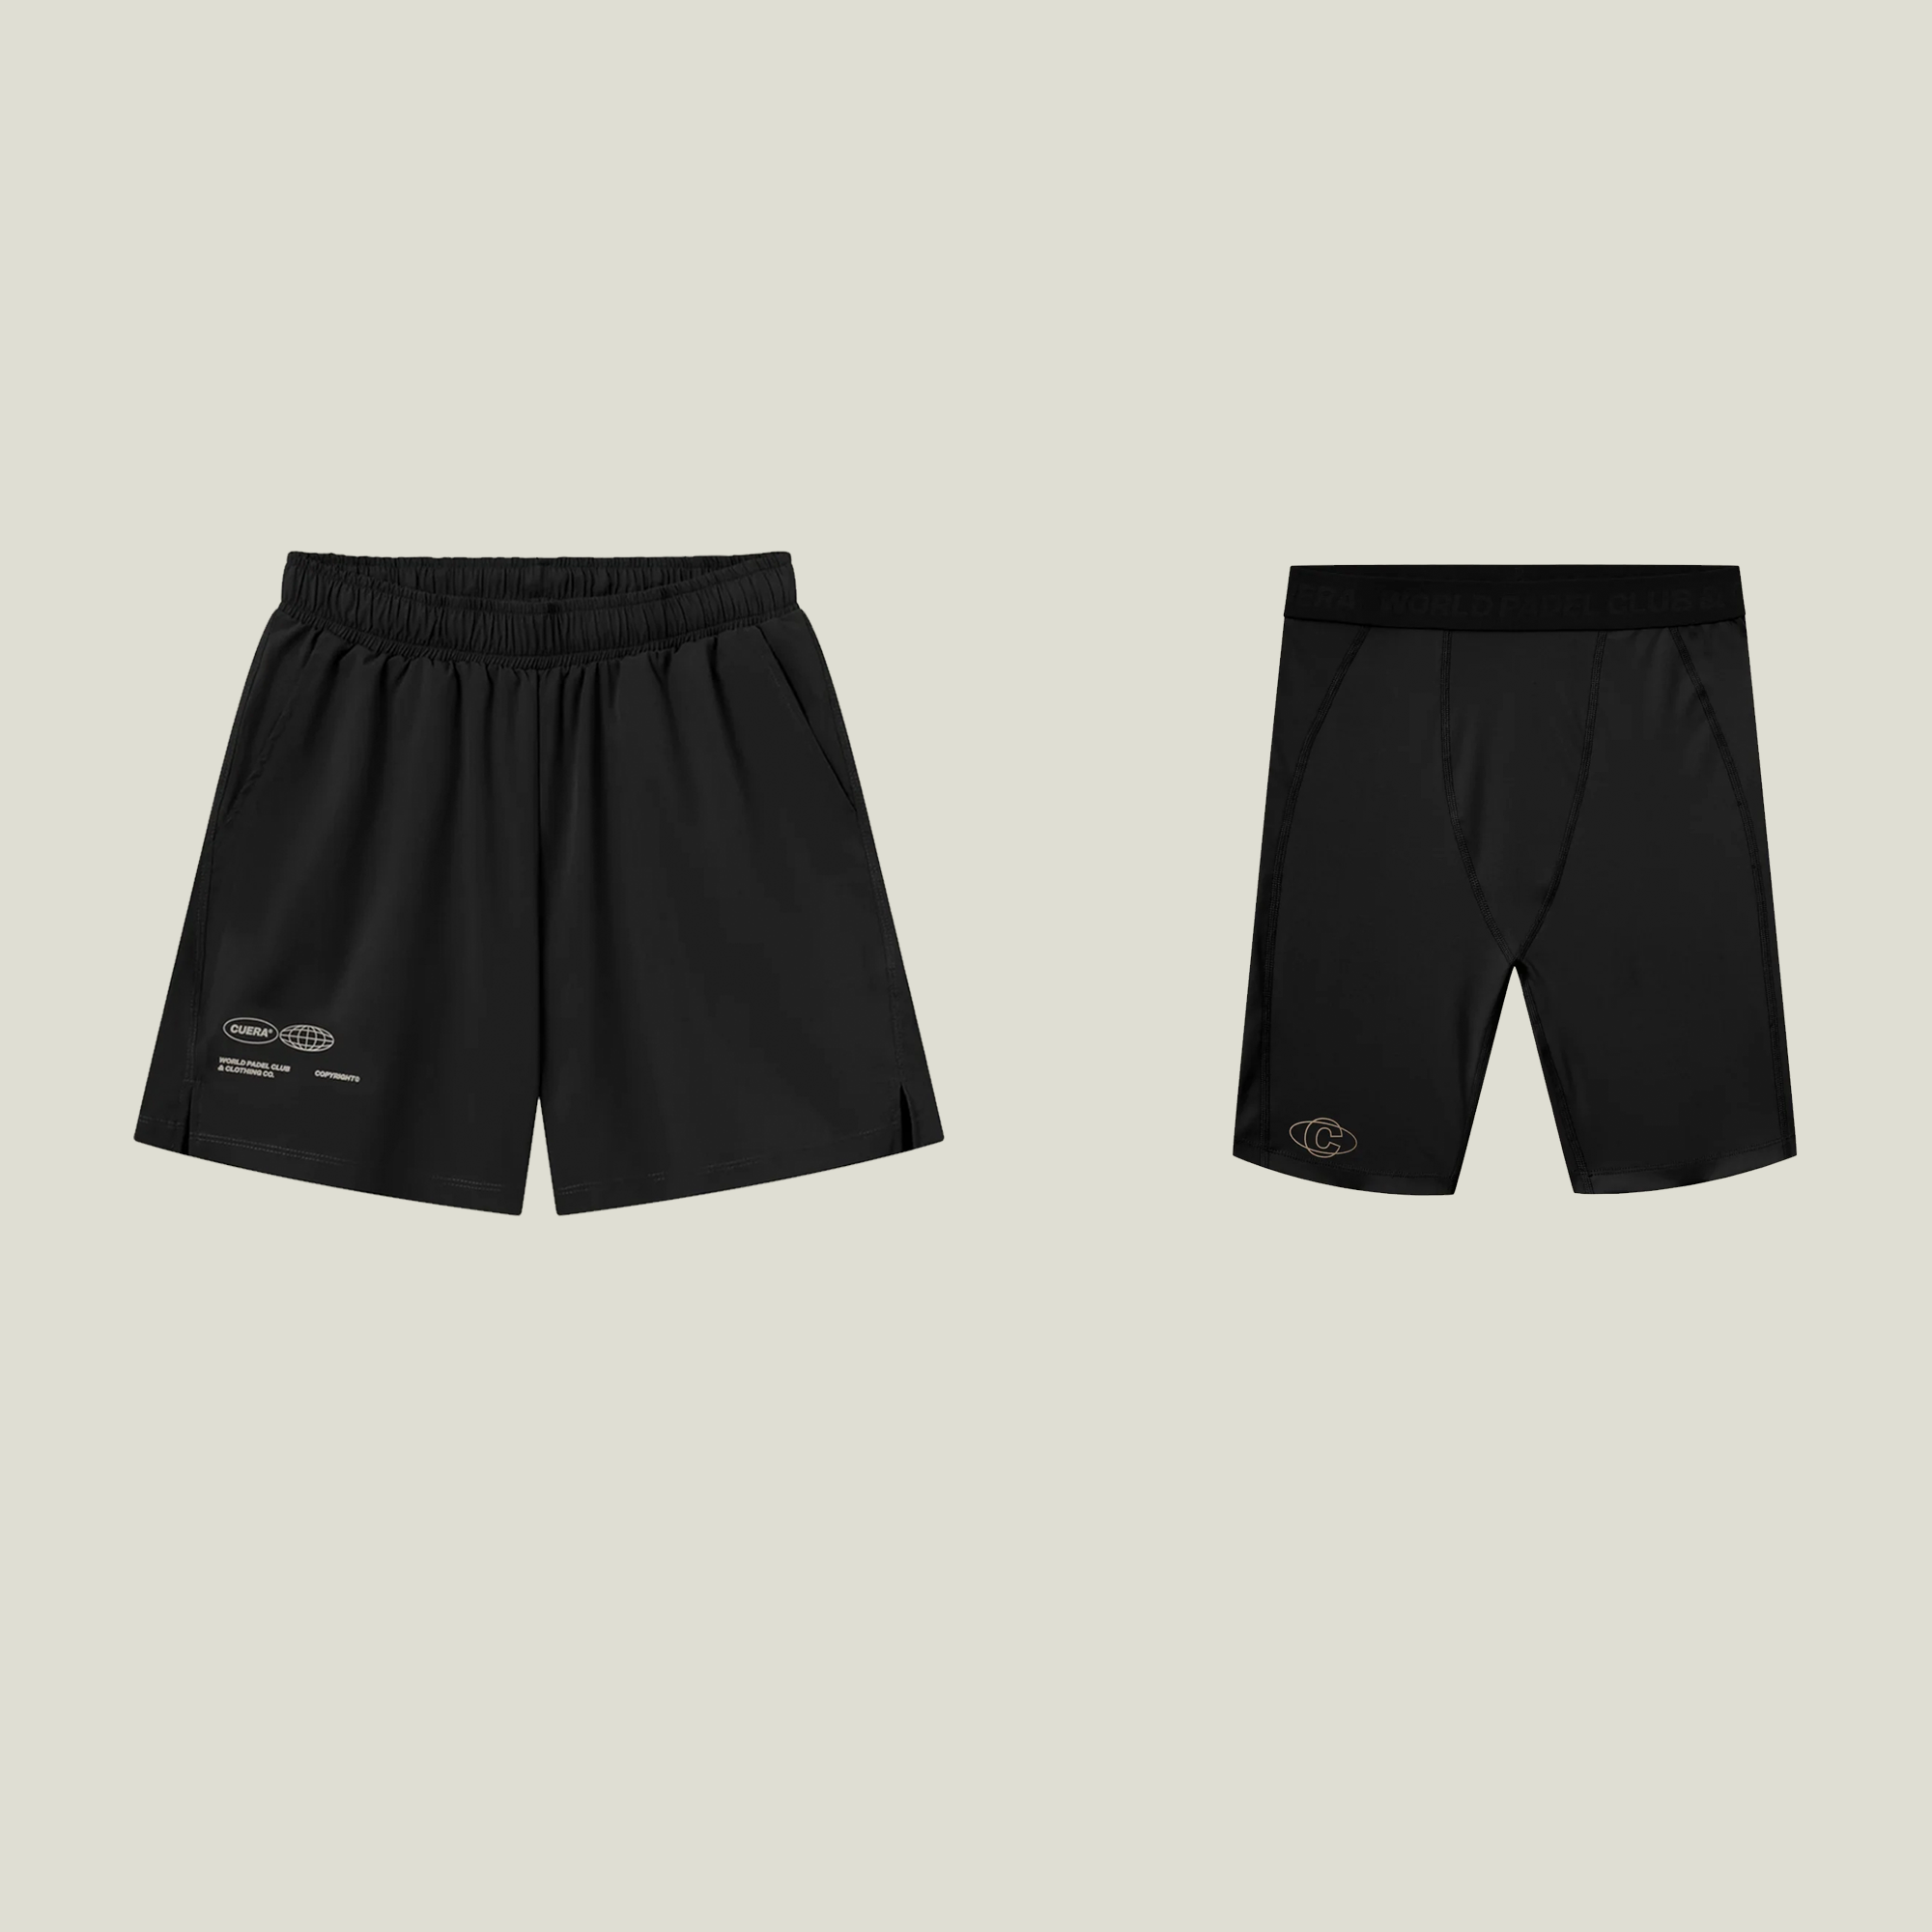 Oncourt Shorts Kit - Black Combo